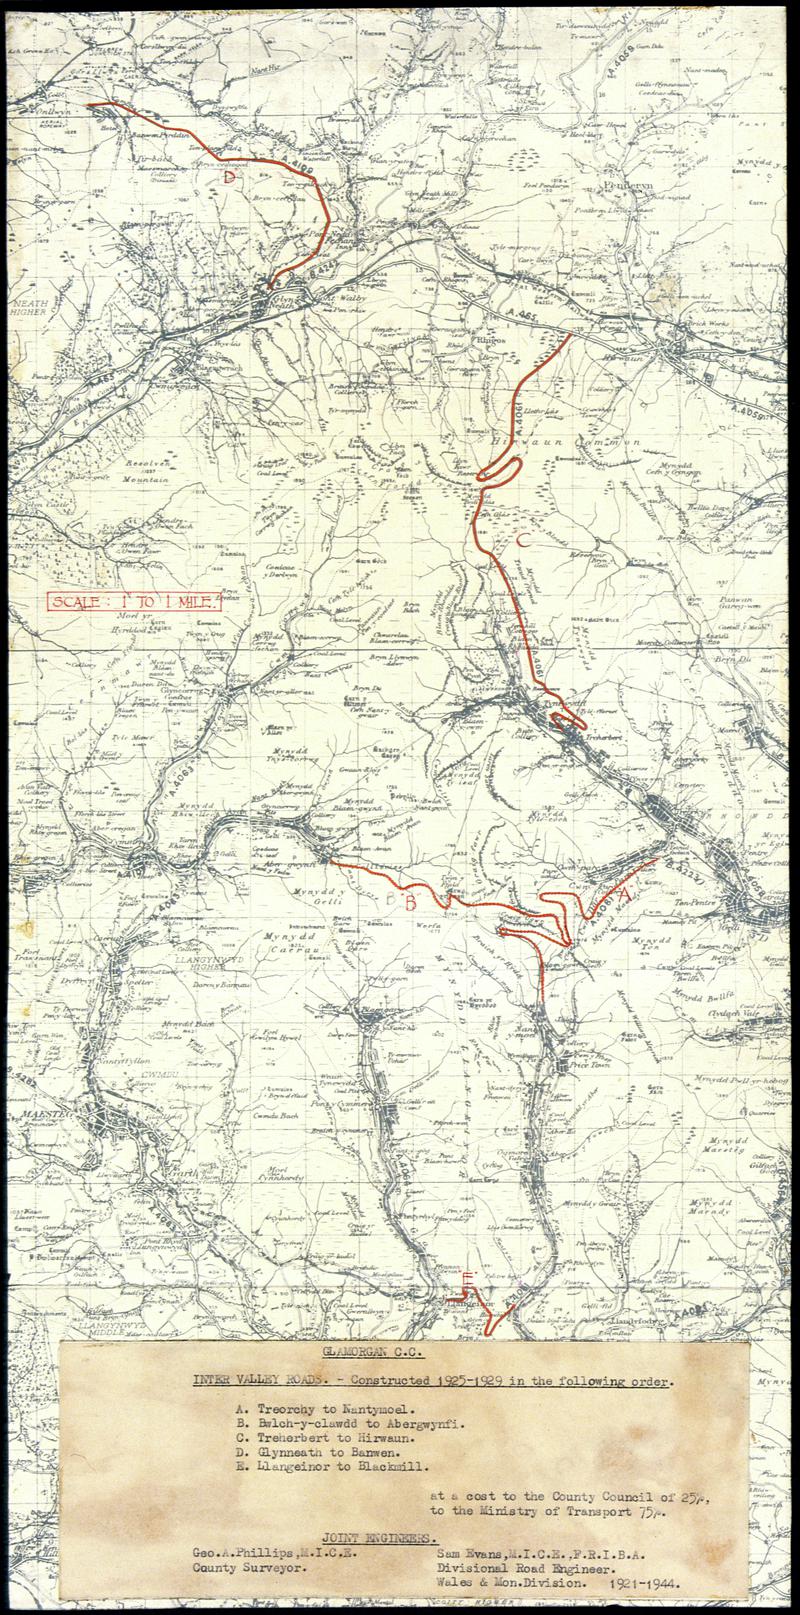 Mid Glamorgan Inter Valleys Road Scheme 1925 - 1928